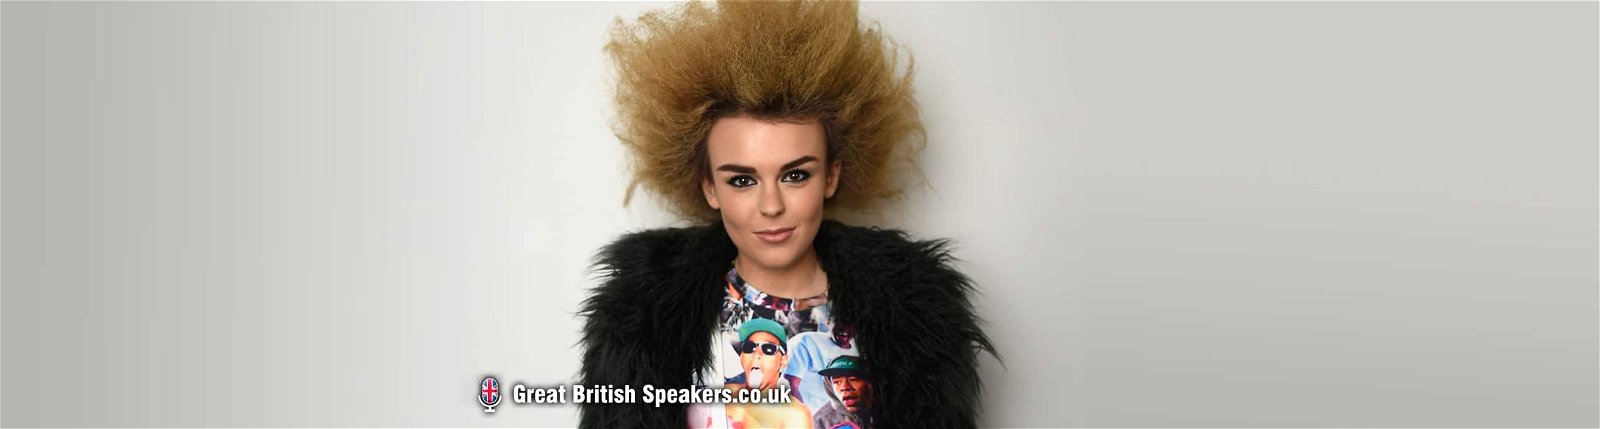 Tallia Storm Influencer Blogger model Singer at Great British Speakers